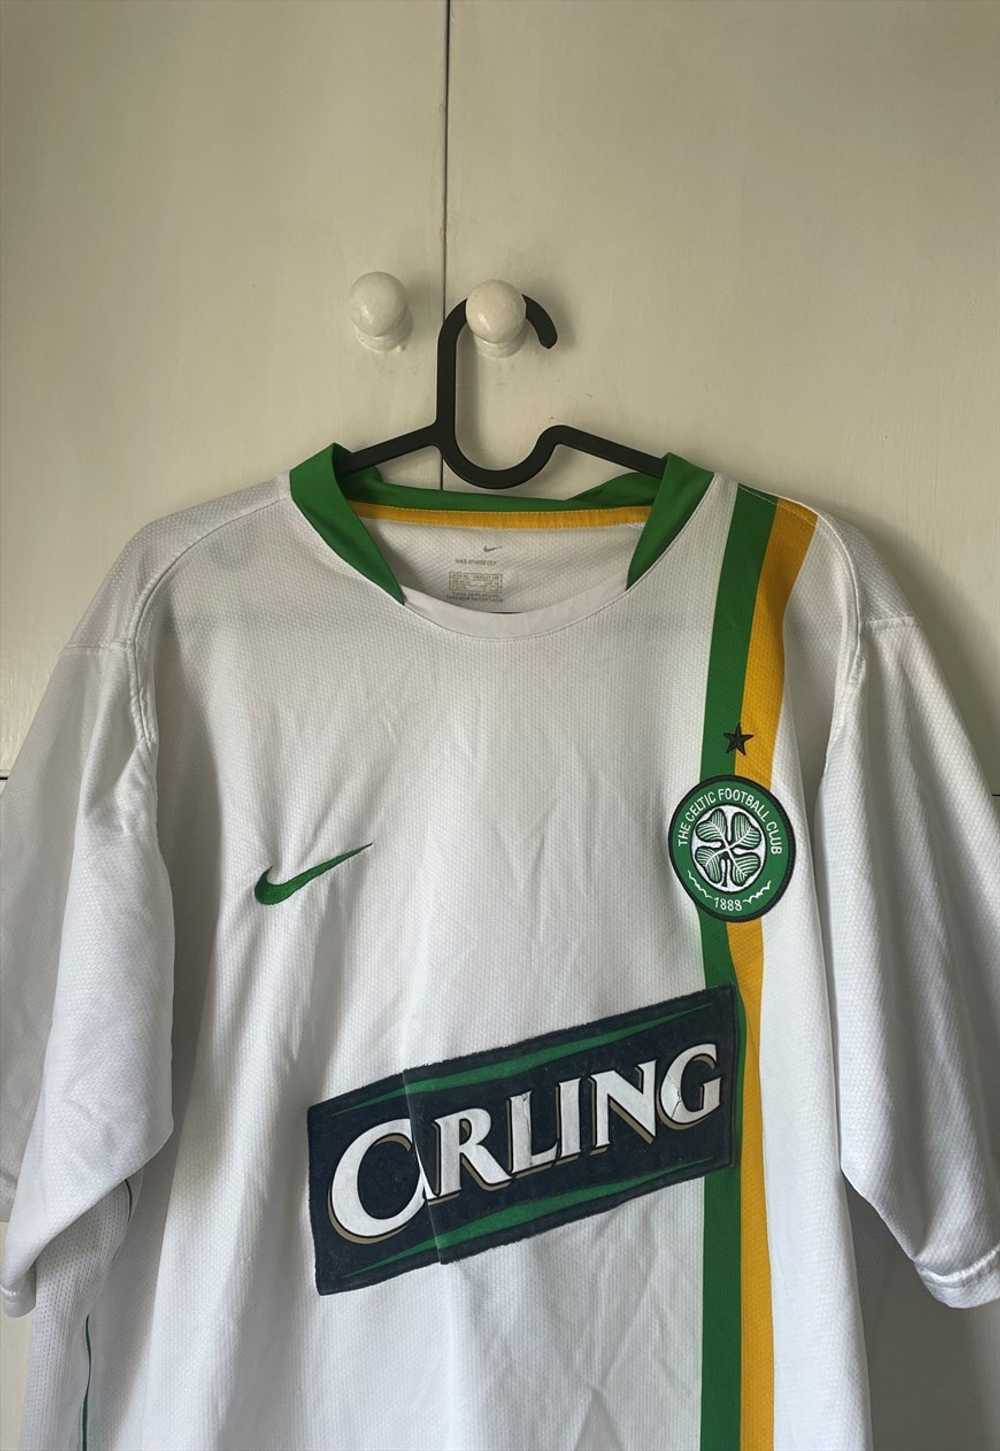 2006-08 Celtic European Shirt - image 3